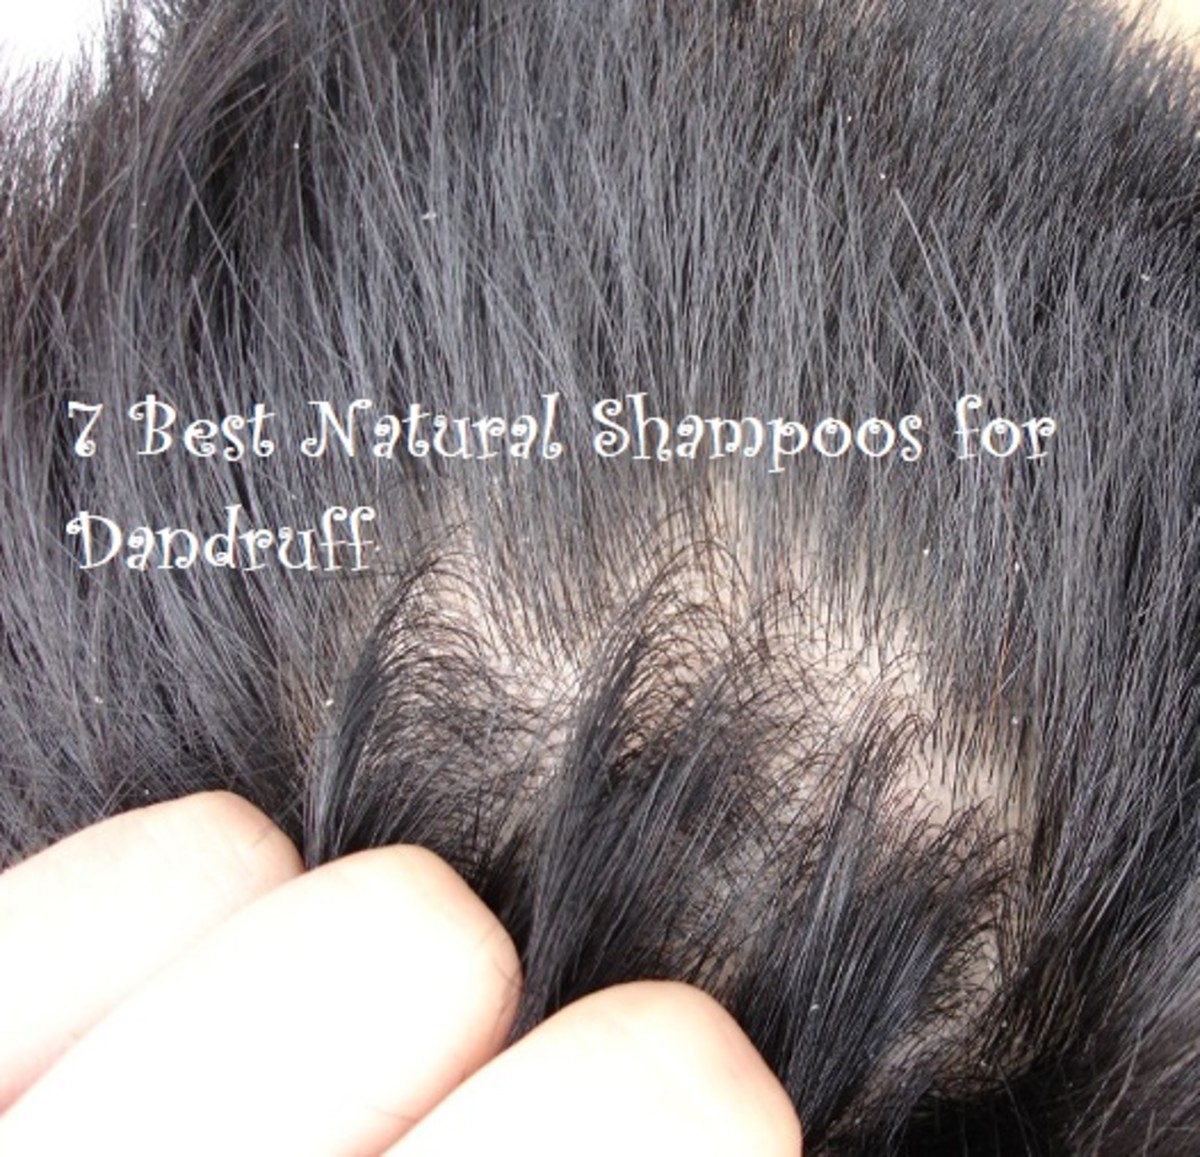 7 Best Natural Shampoos for Dandruff